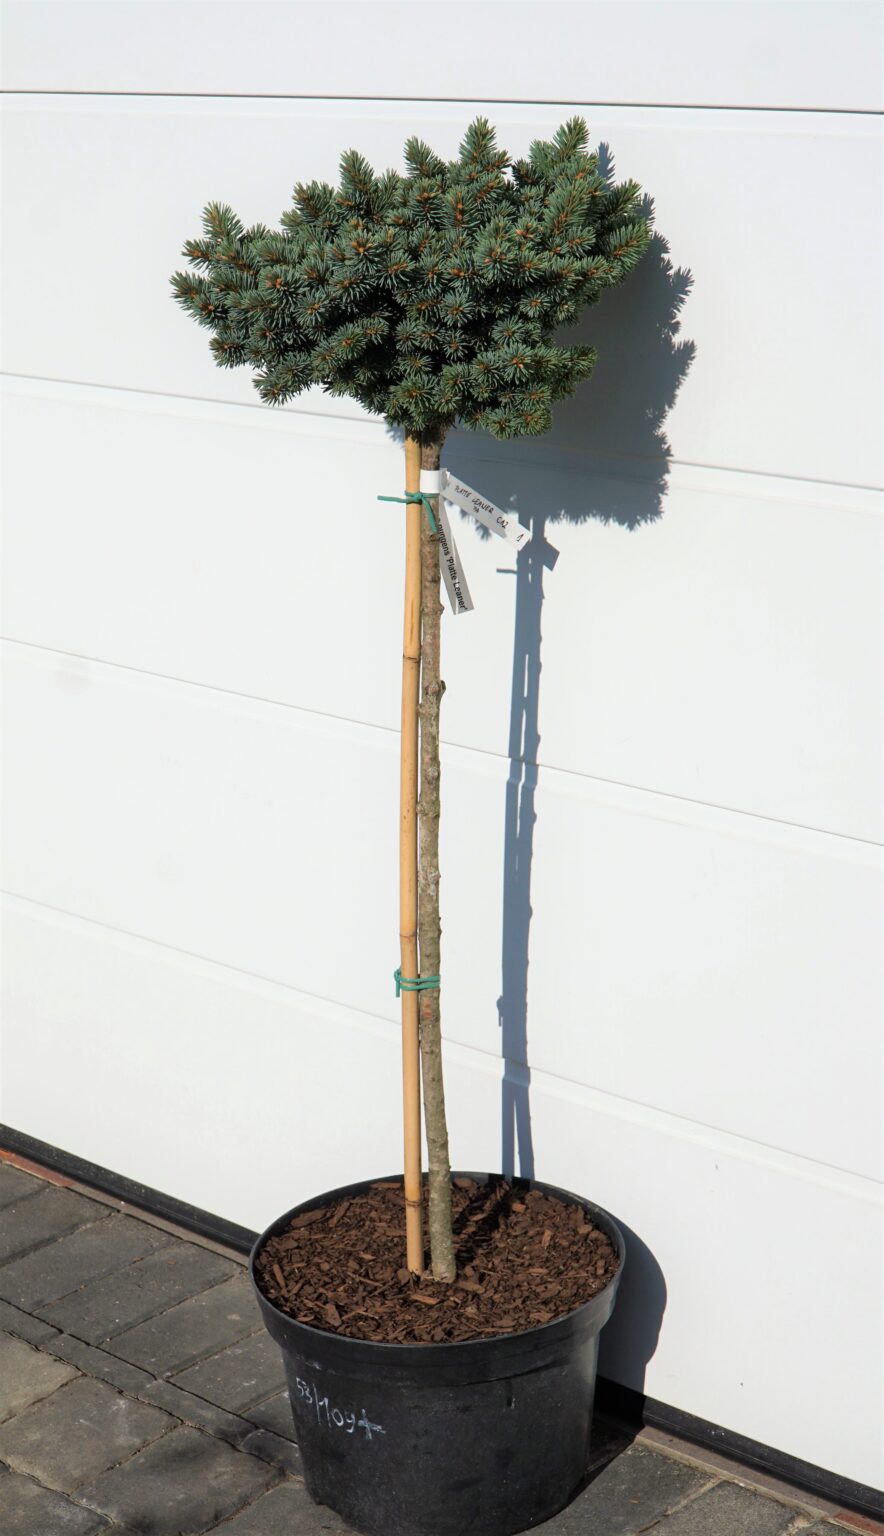 ŚWIERK KŁUJĄCY PLATTE LEANER Picea pungens